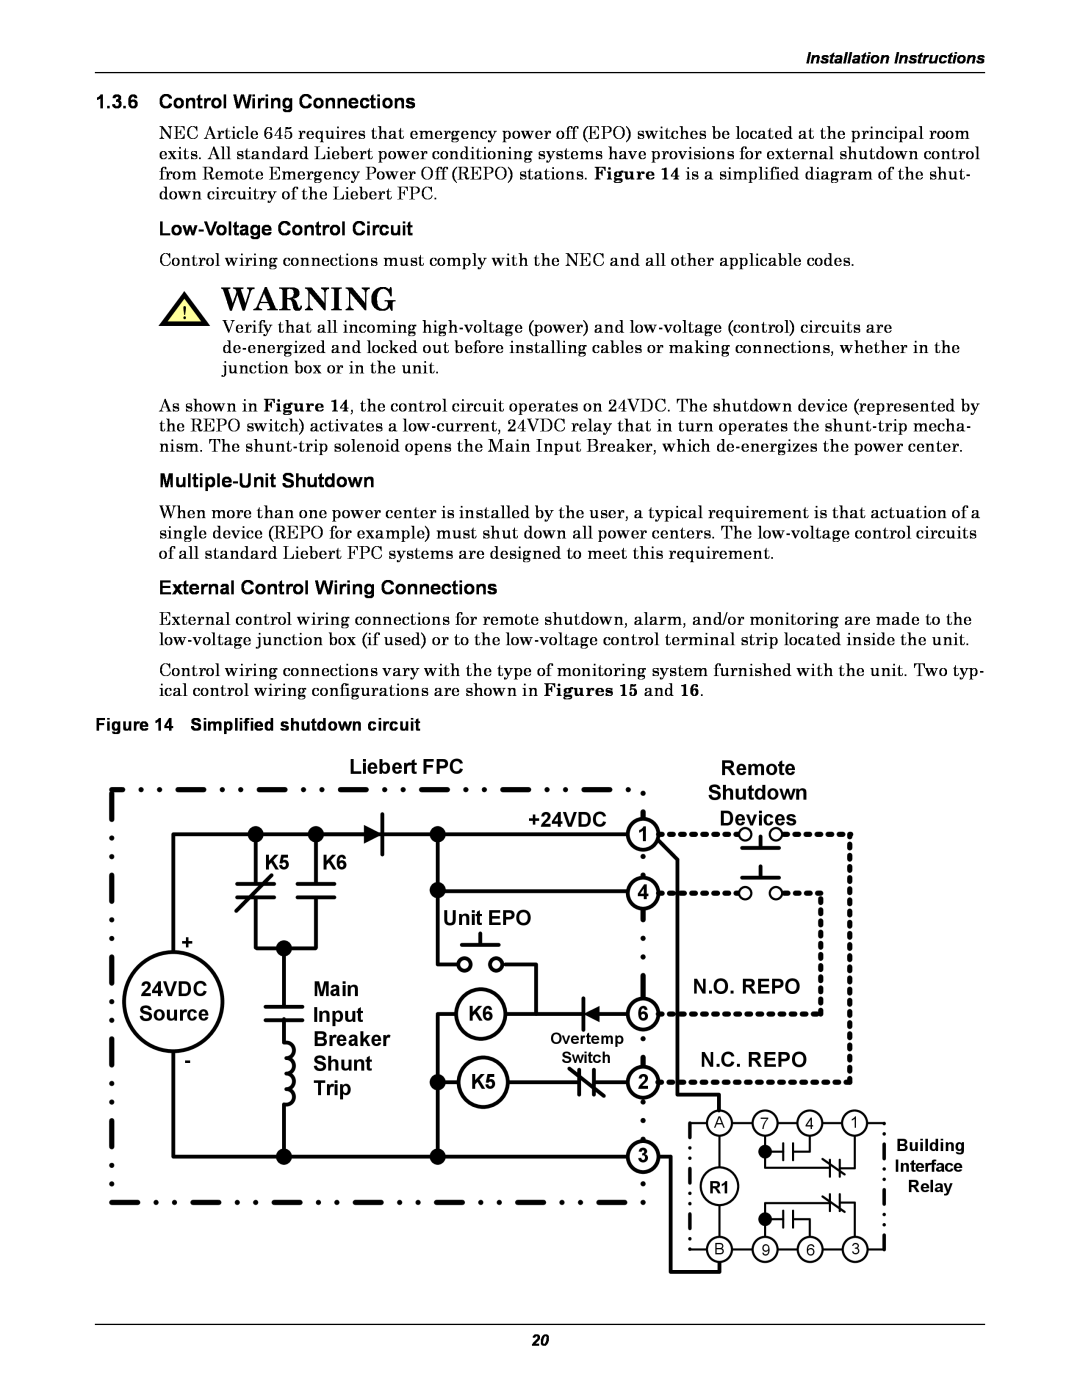 Emerson user manual Liebert FPC, +24VDC, Unit EPO, Main, N.O. Repo, Source, Input, Breaker, N.C. Repo, Shunt, Trip 